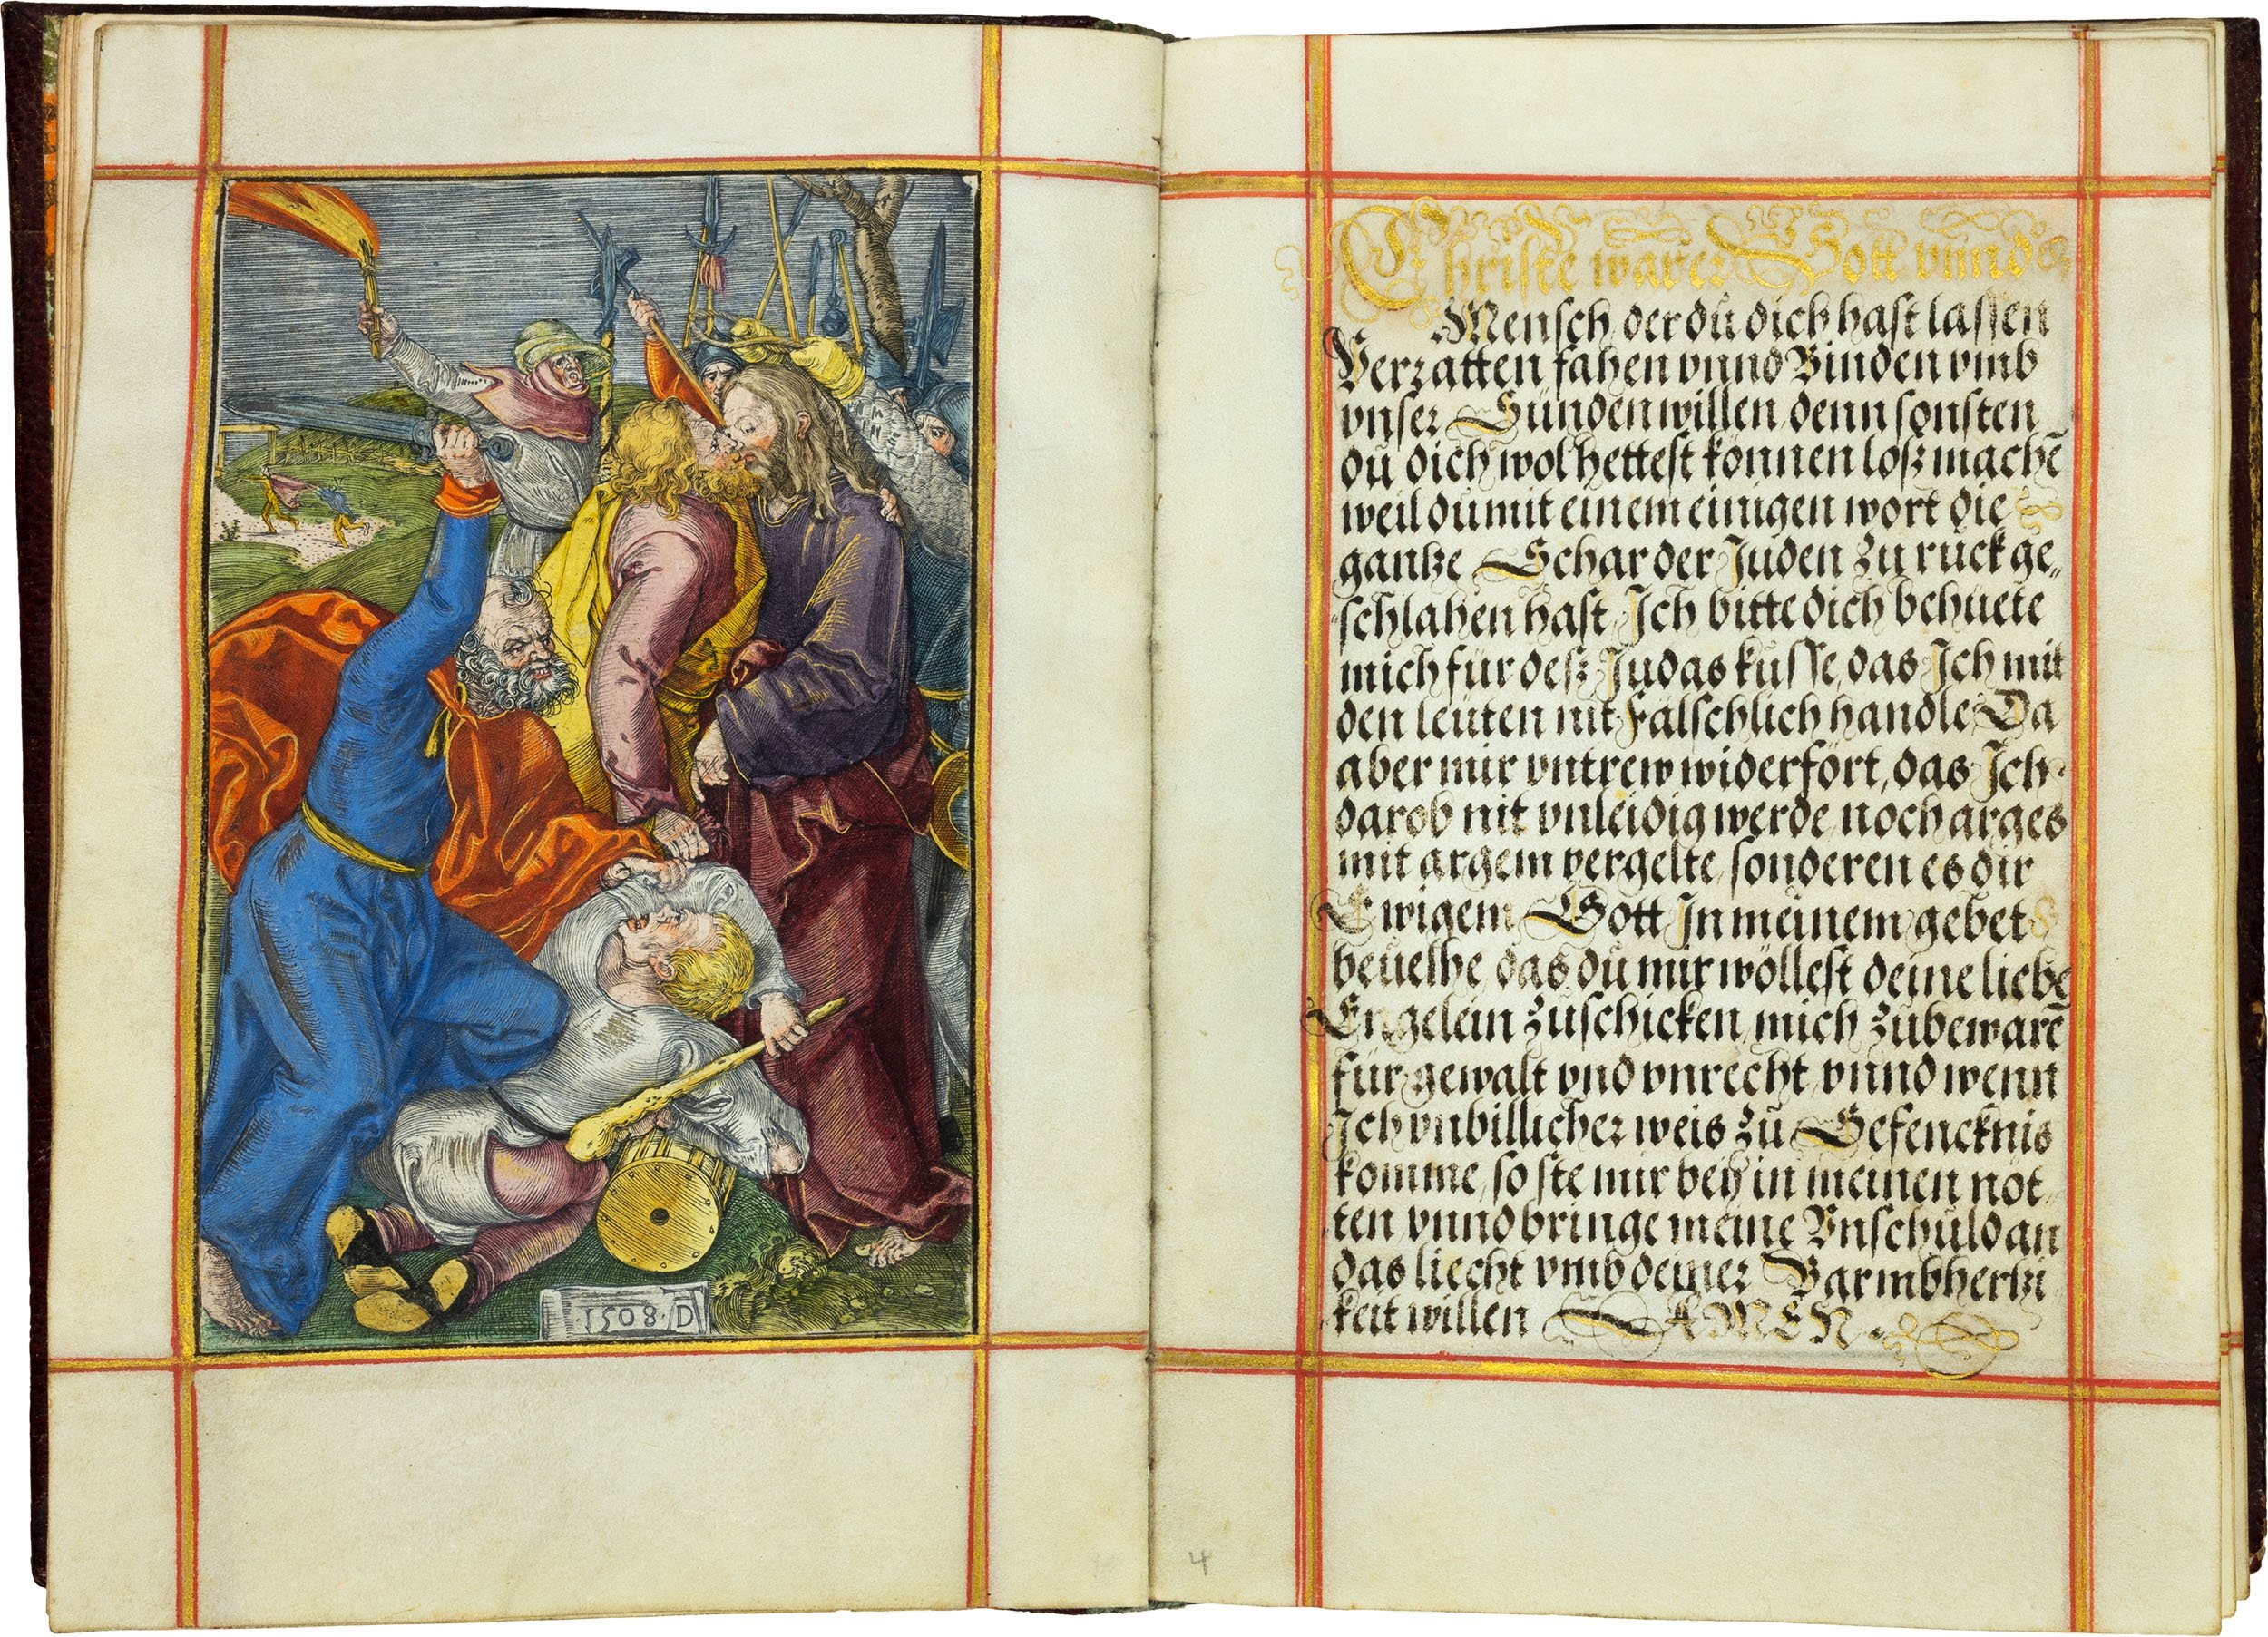 duerer-engraved-passion-kupferstich-passion-oertl-german-manuscript-vellum-1587-illuminated-6.jpg